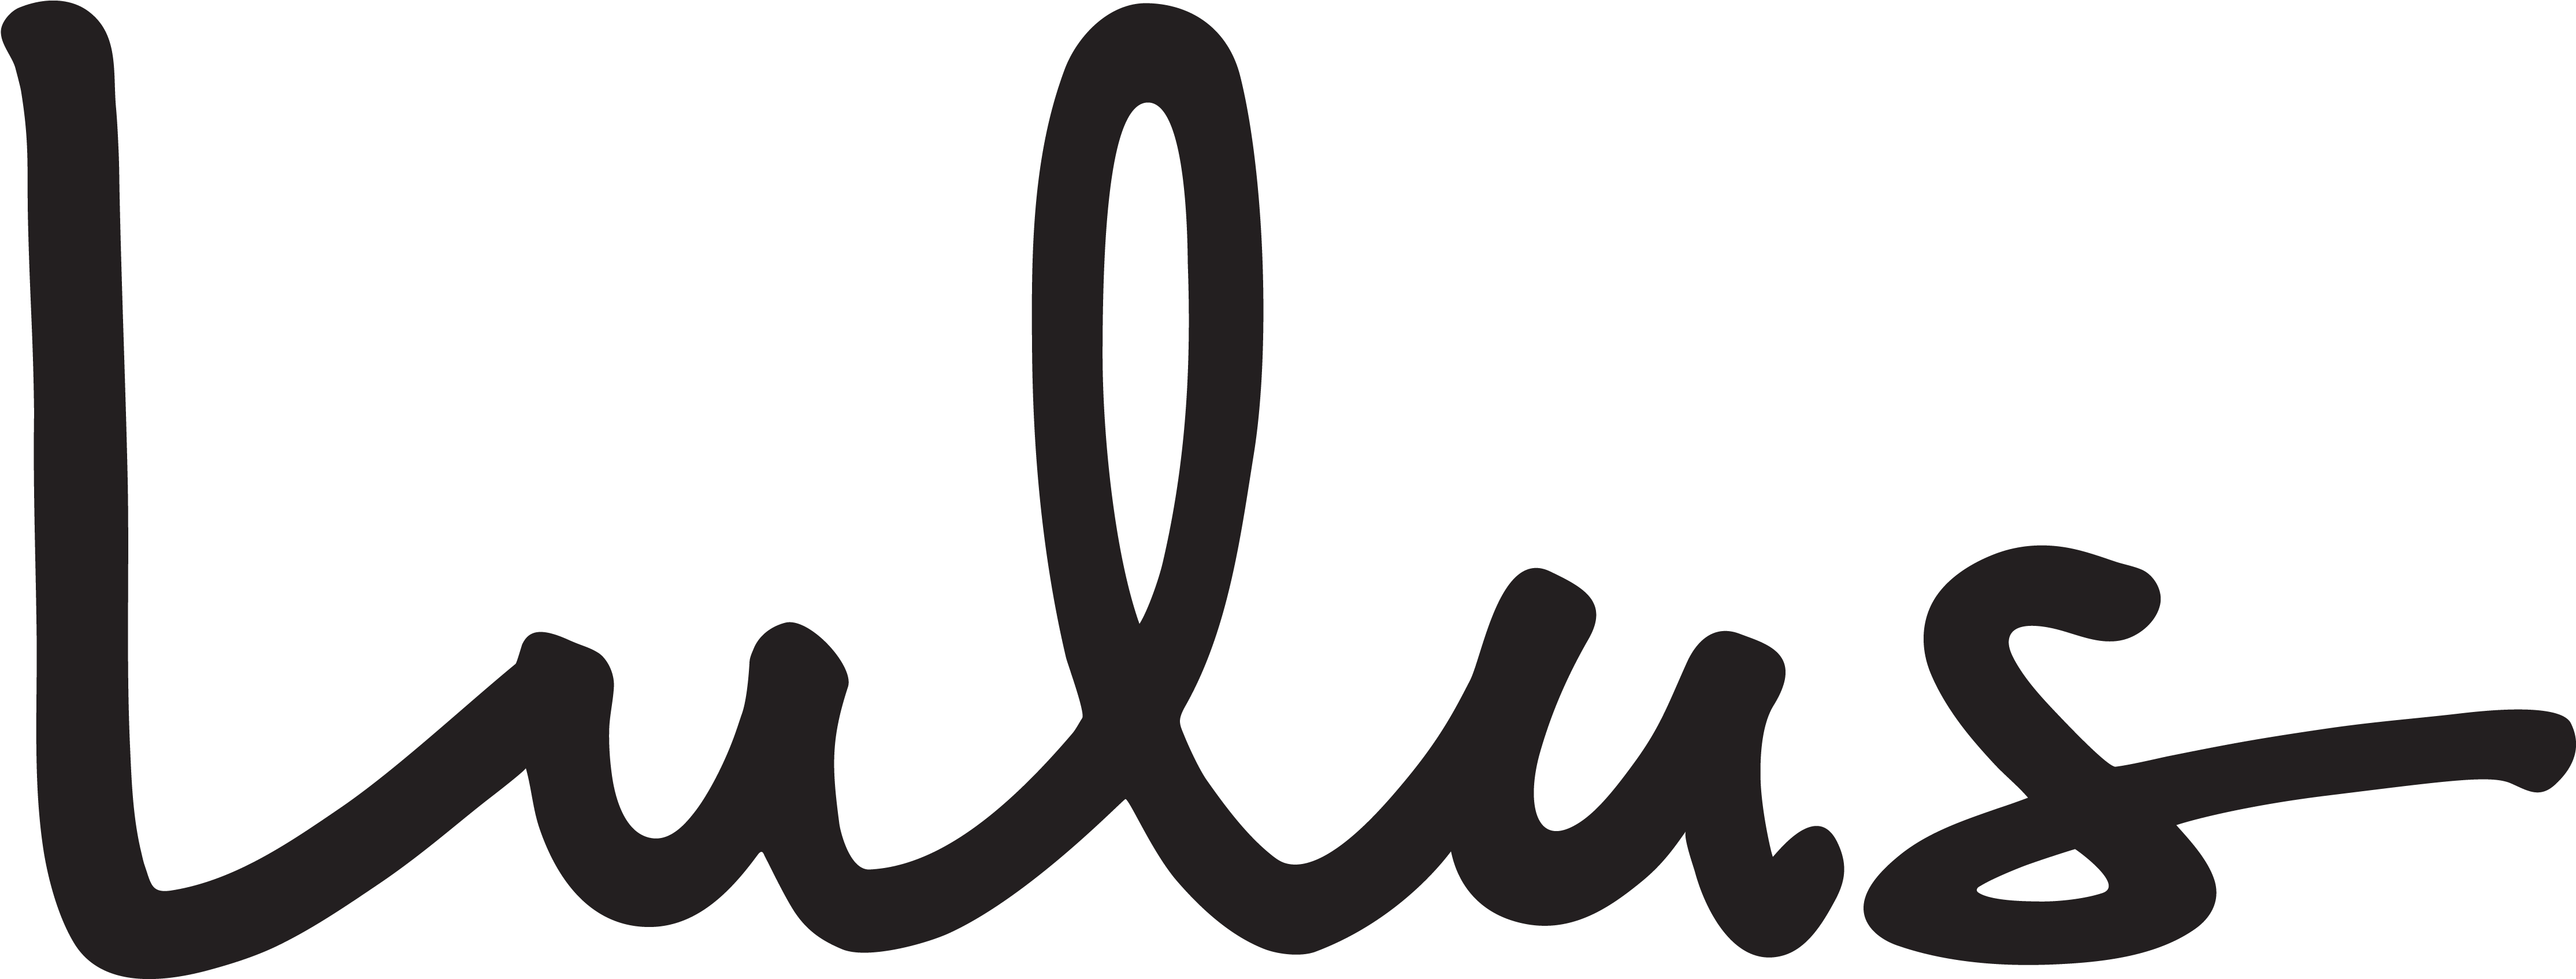 Lulus Fashion Brand Logo PNG